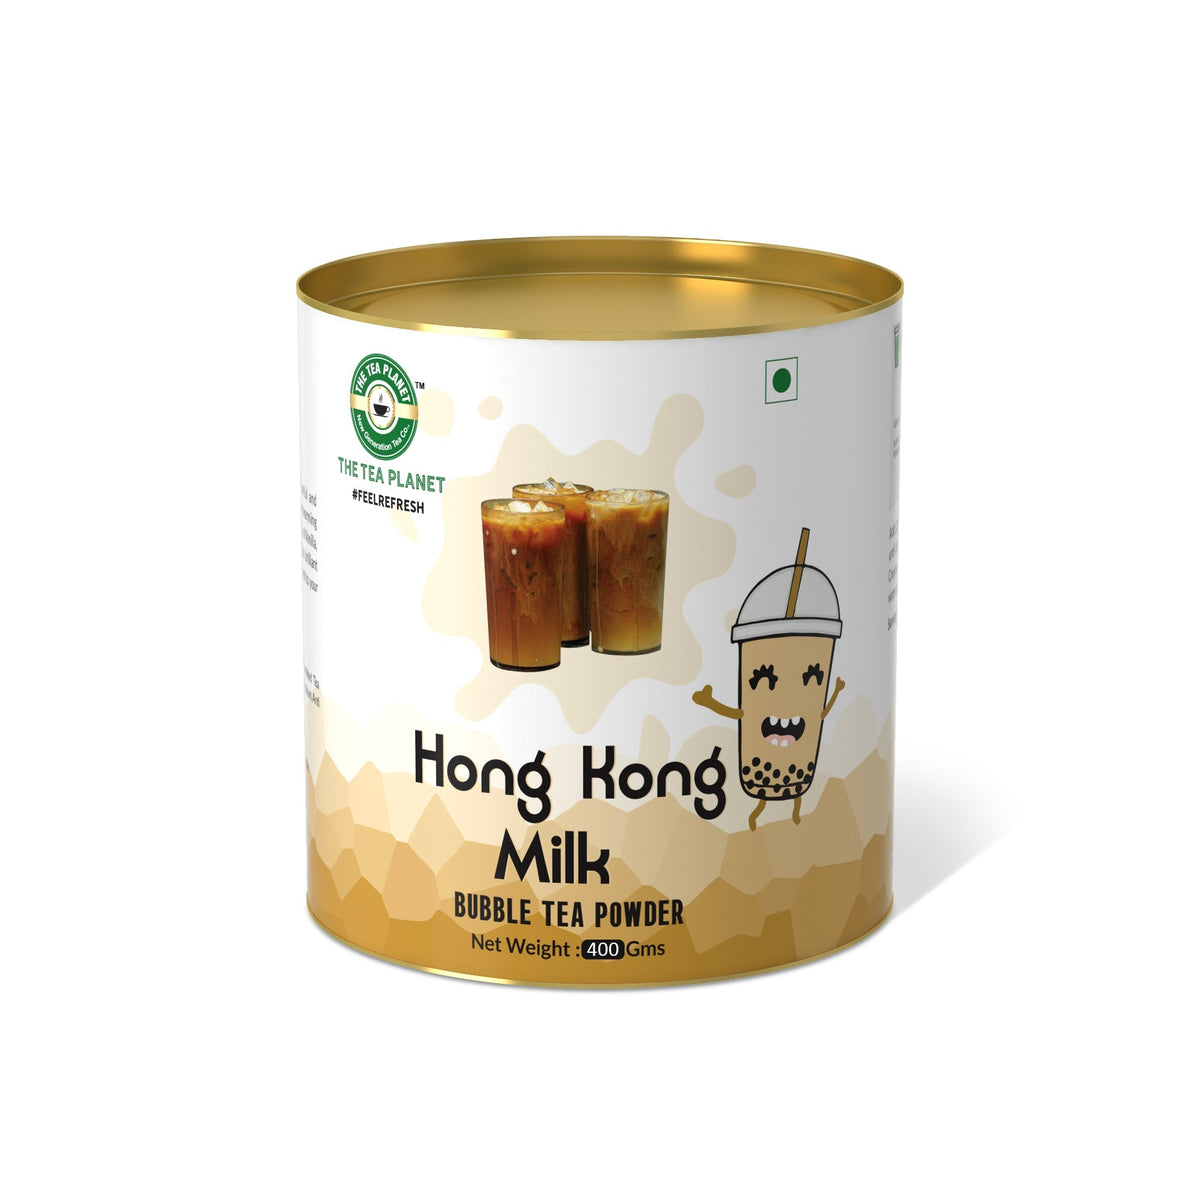 Hong Kong Milk Bubble Tea Premix - 400 gms